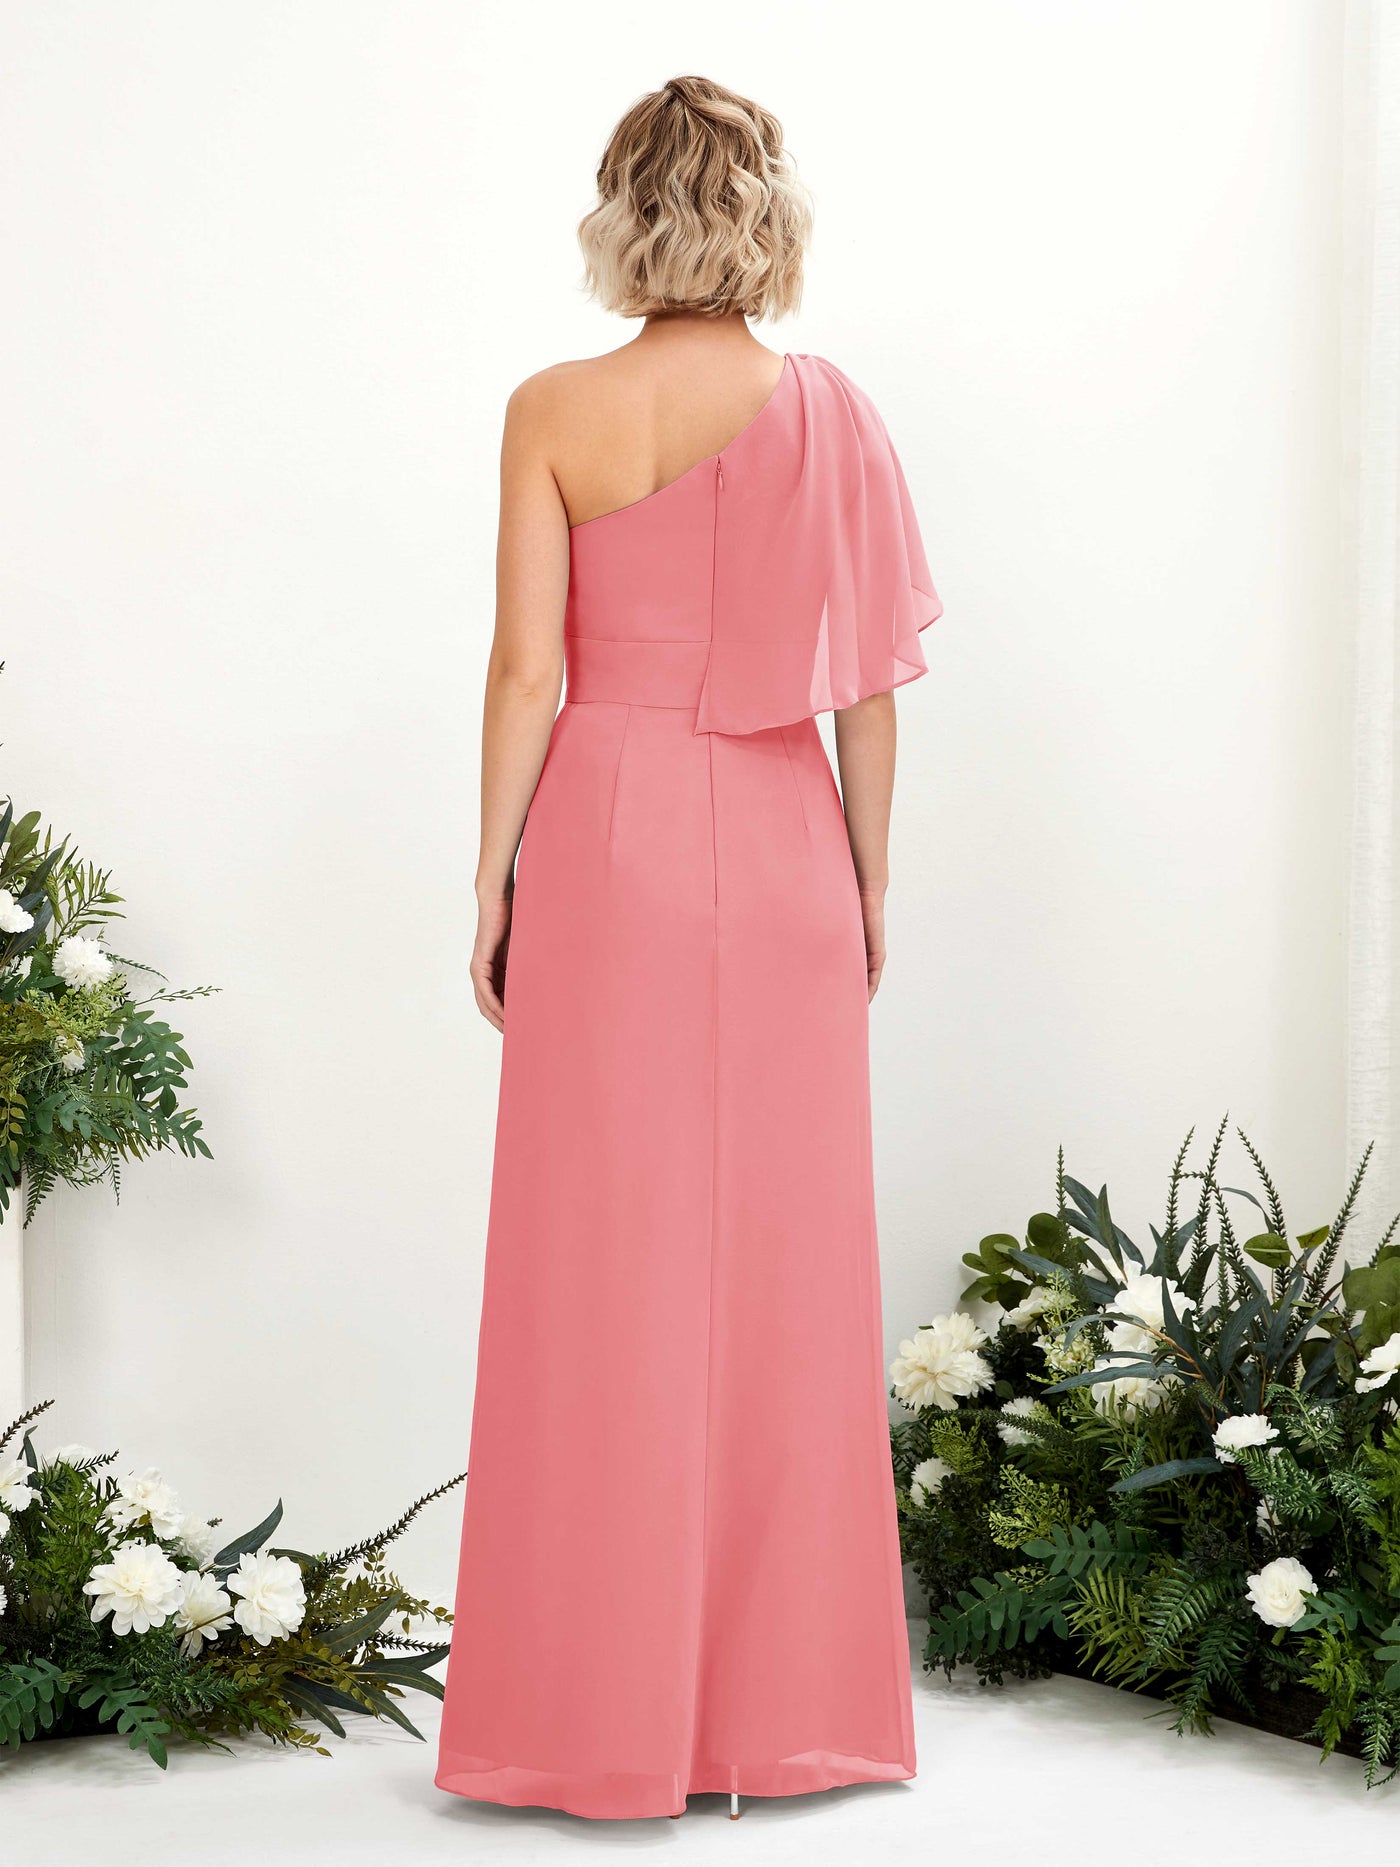 Coral Pink Bridesmaid Dresses Bridesmaid Dress Ball Gown Chiffon Full Length Short Sleeves Wedding Party Dress (81223730)#color_coral-pink